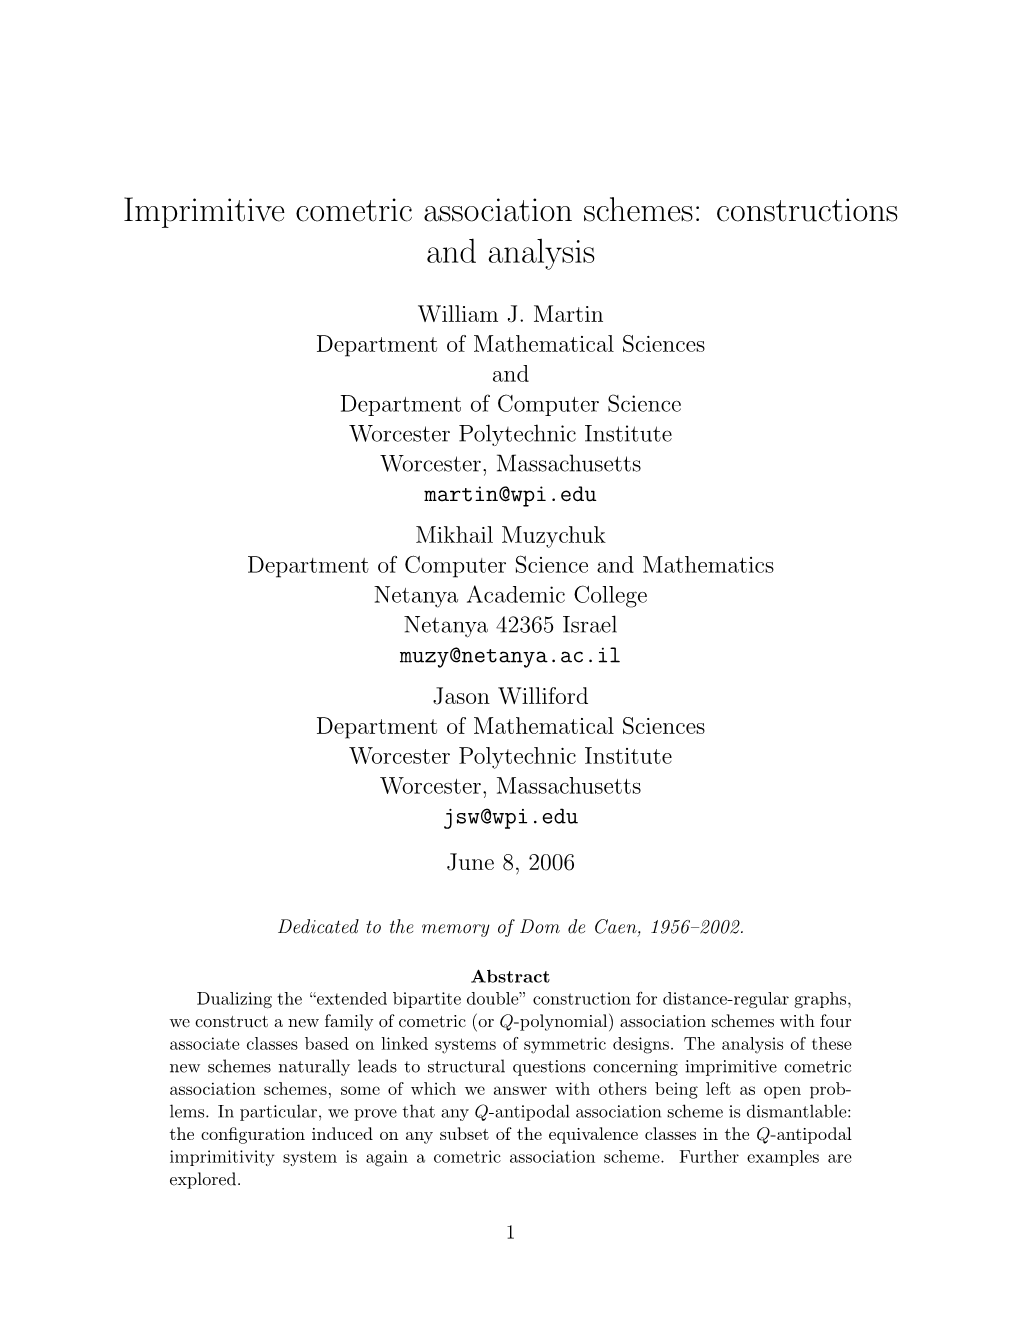 Imprimitive Cometric Association Schemes: Constructions and Analysis